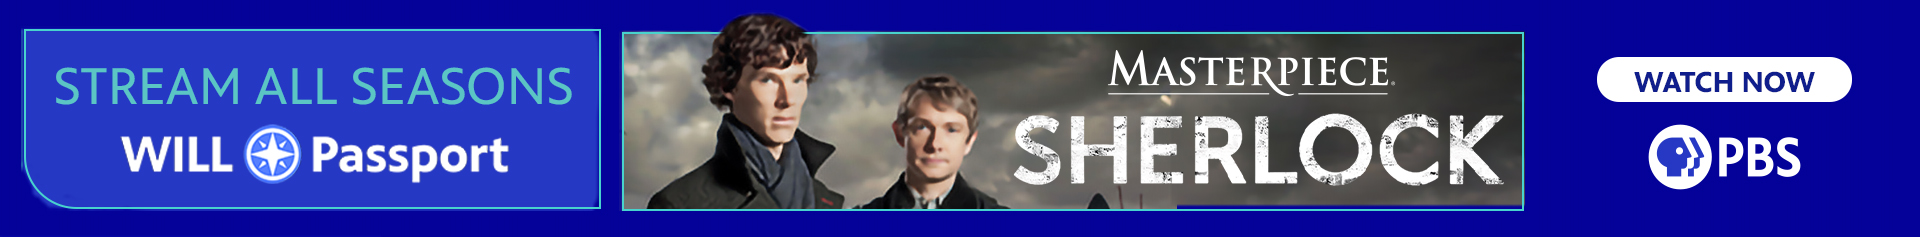 PBS masterpiece series: Sherlock